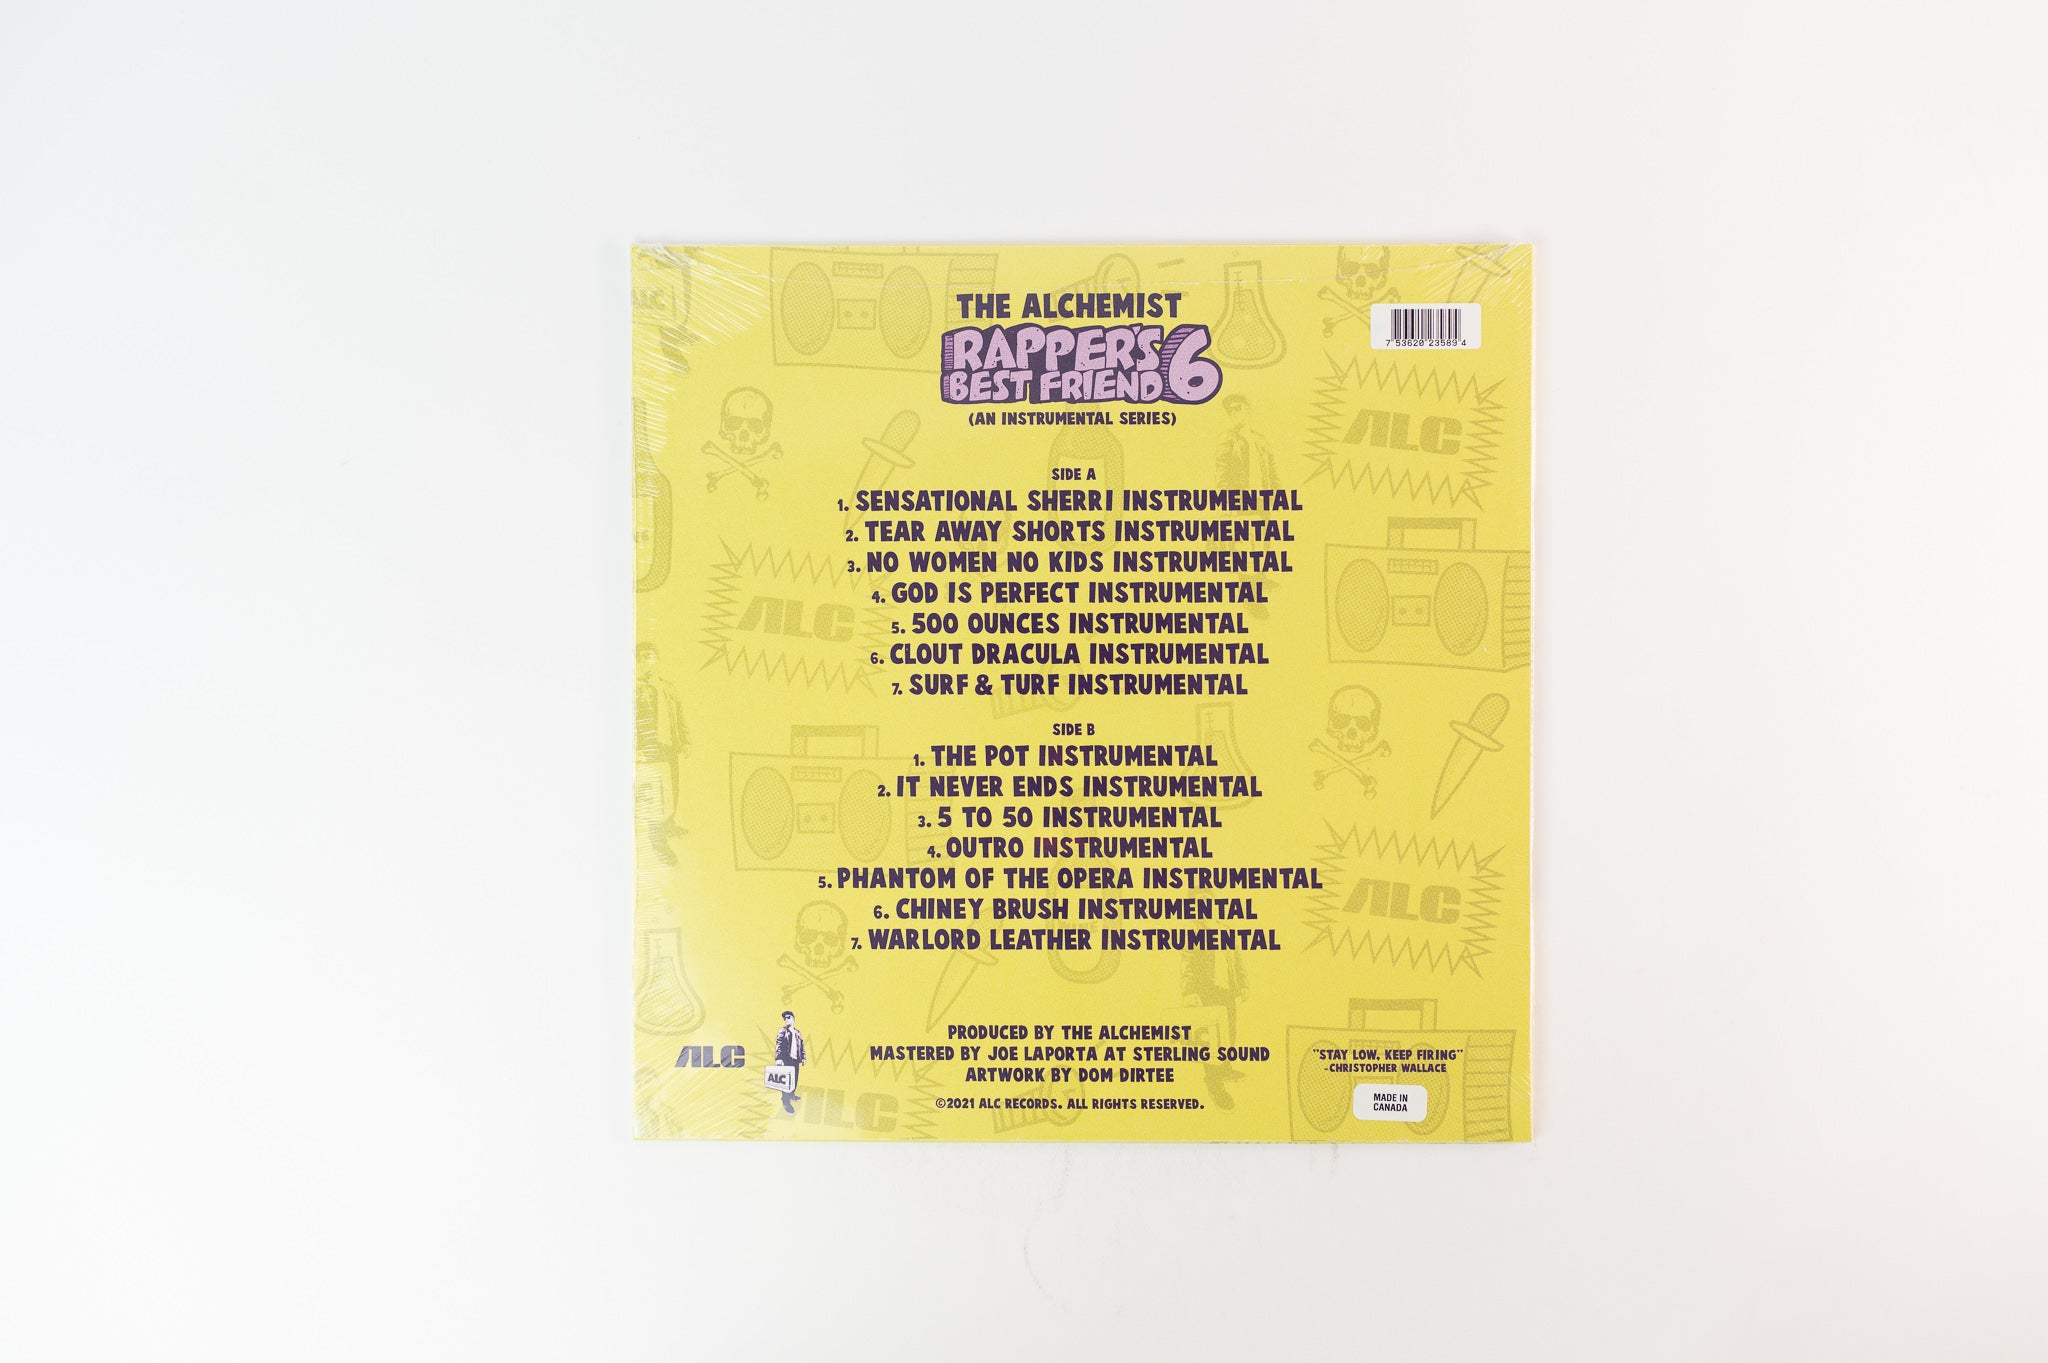 Alchemist - Rapper’s Best Friend 6 (An Instrumental Series) on ALC Limited Purple Vinyl Sealed